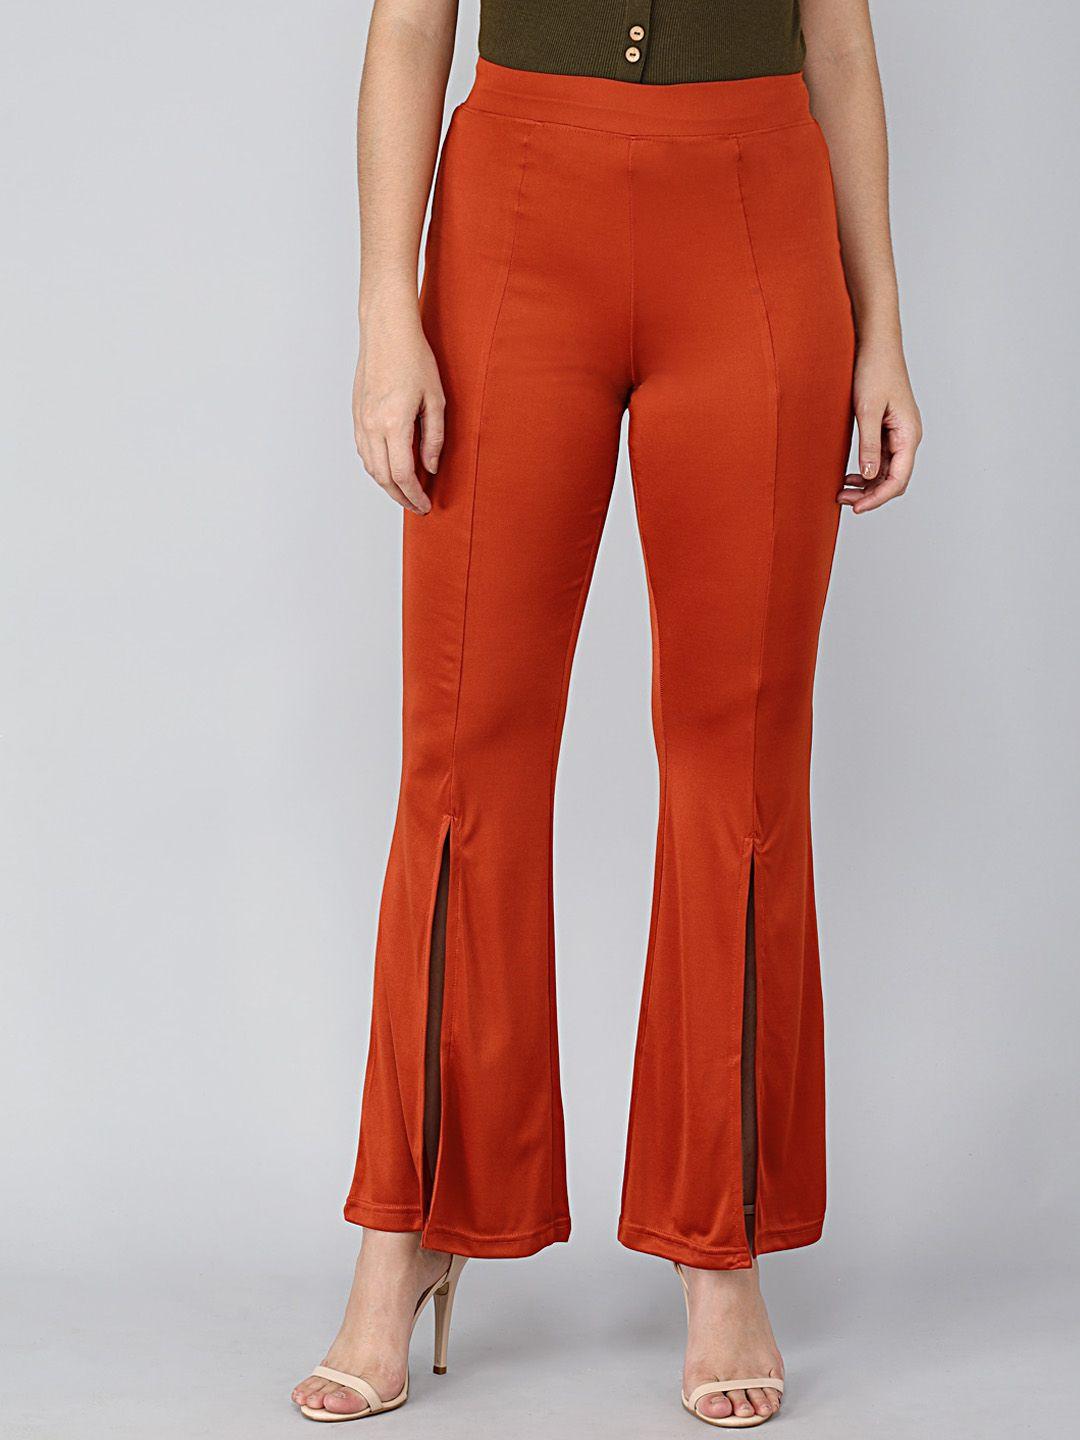 kotty-women-orange-flared-high-rise-bootcut-trousers